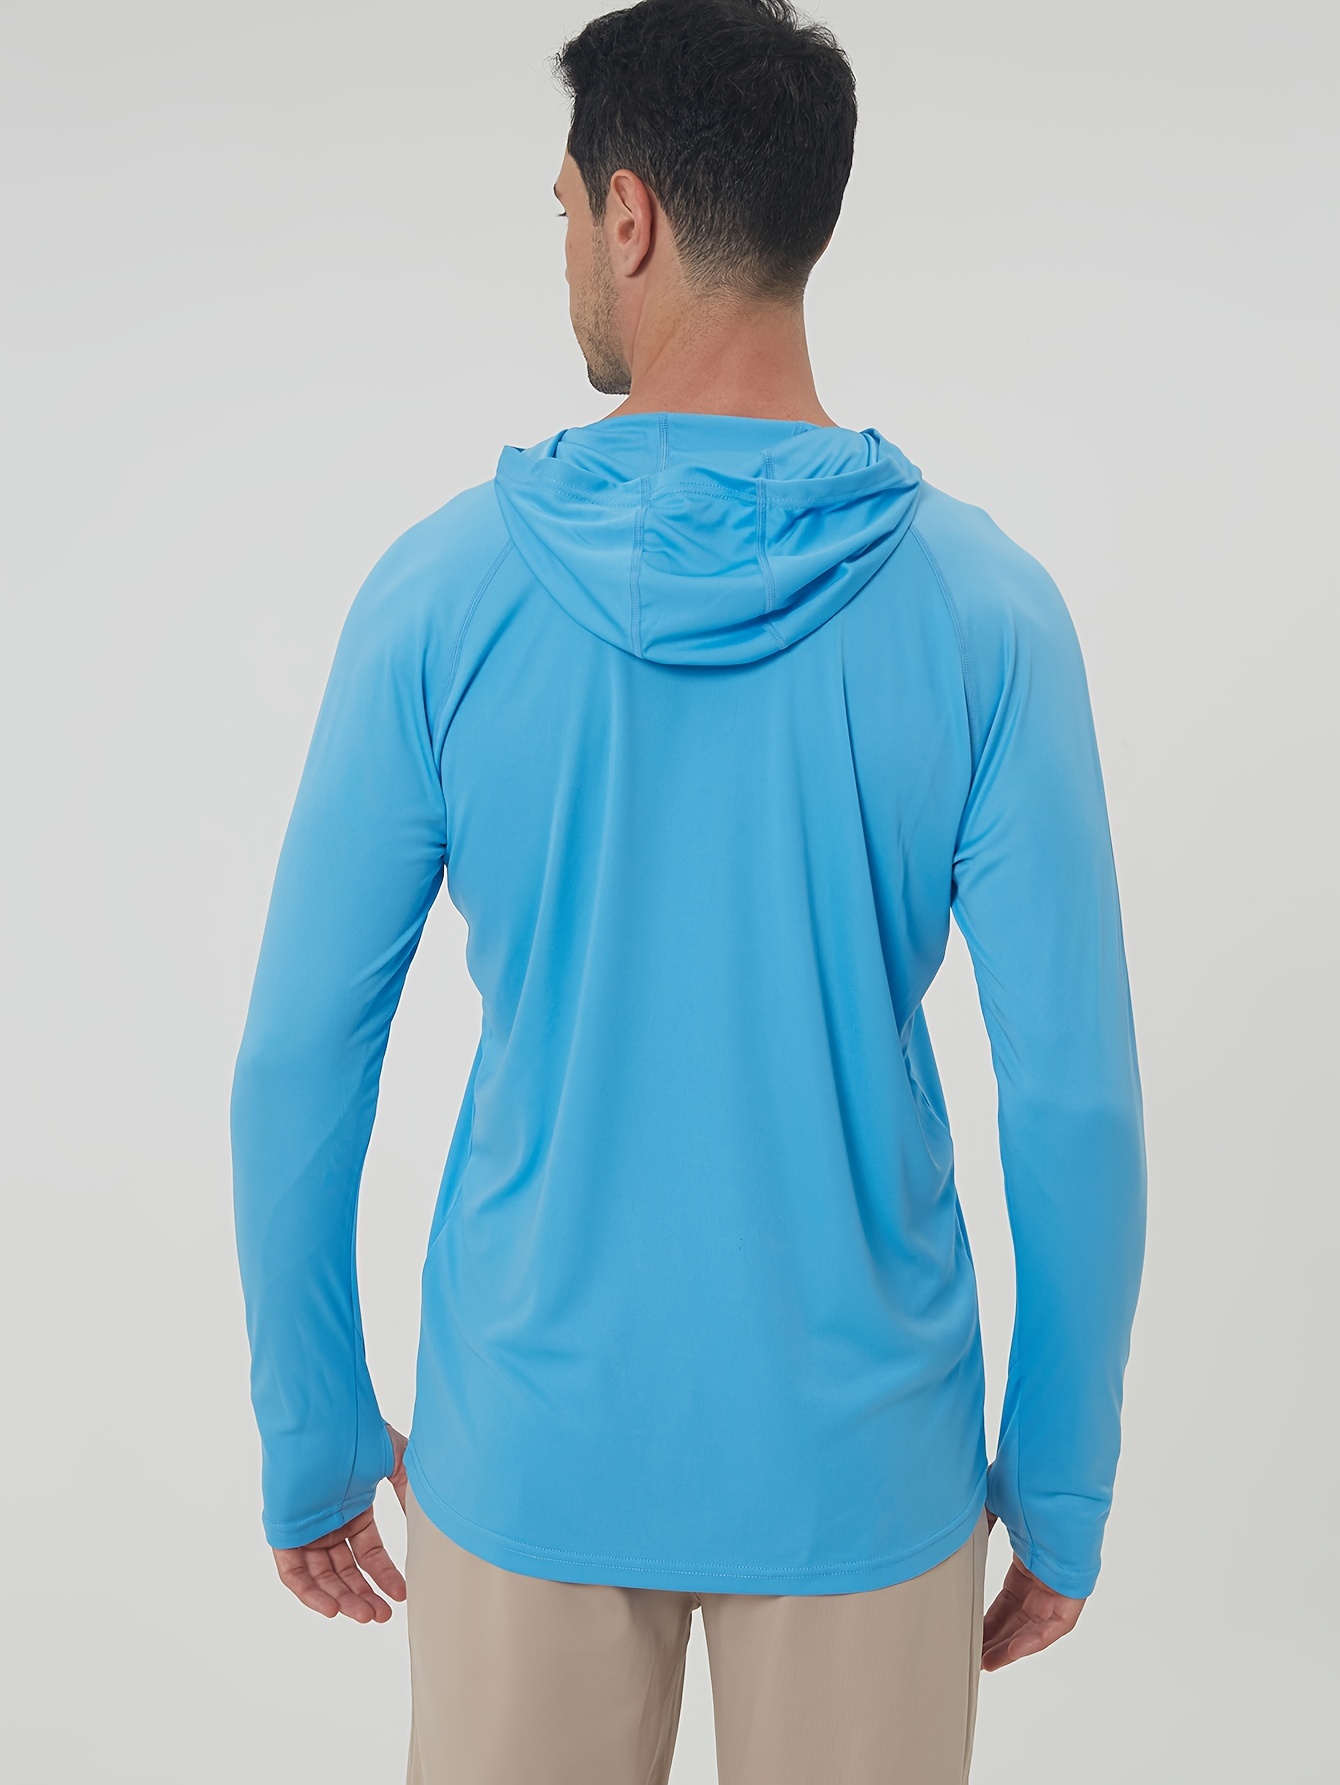 Blue Line Leo/Snook Hoodie for Men, UPF Clothing